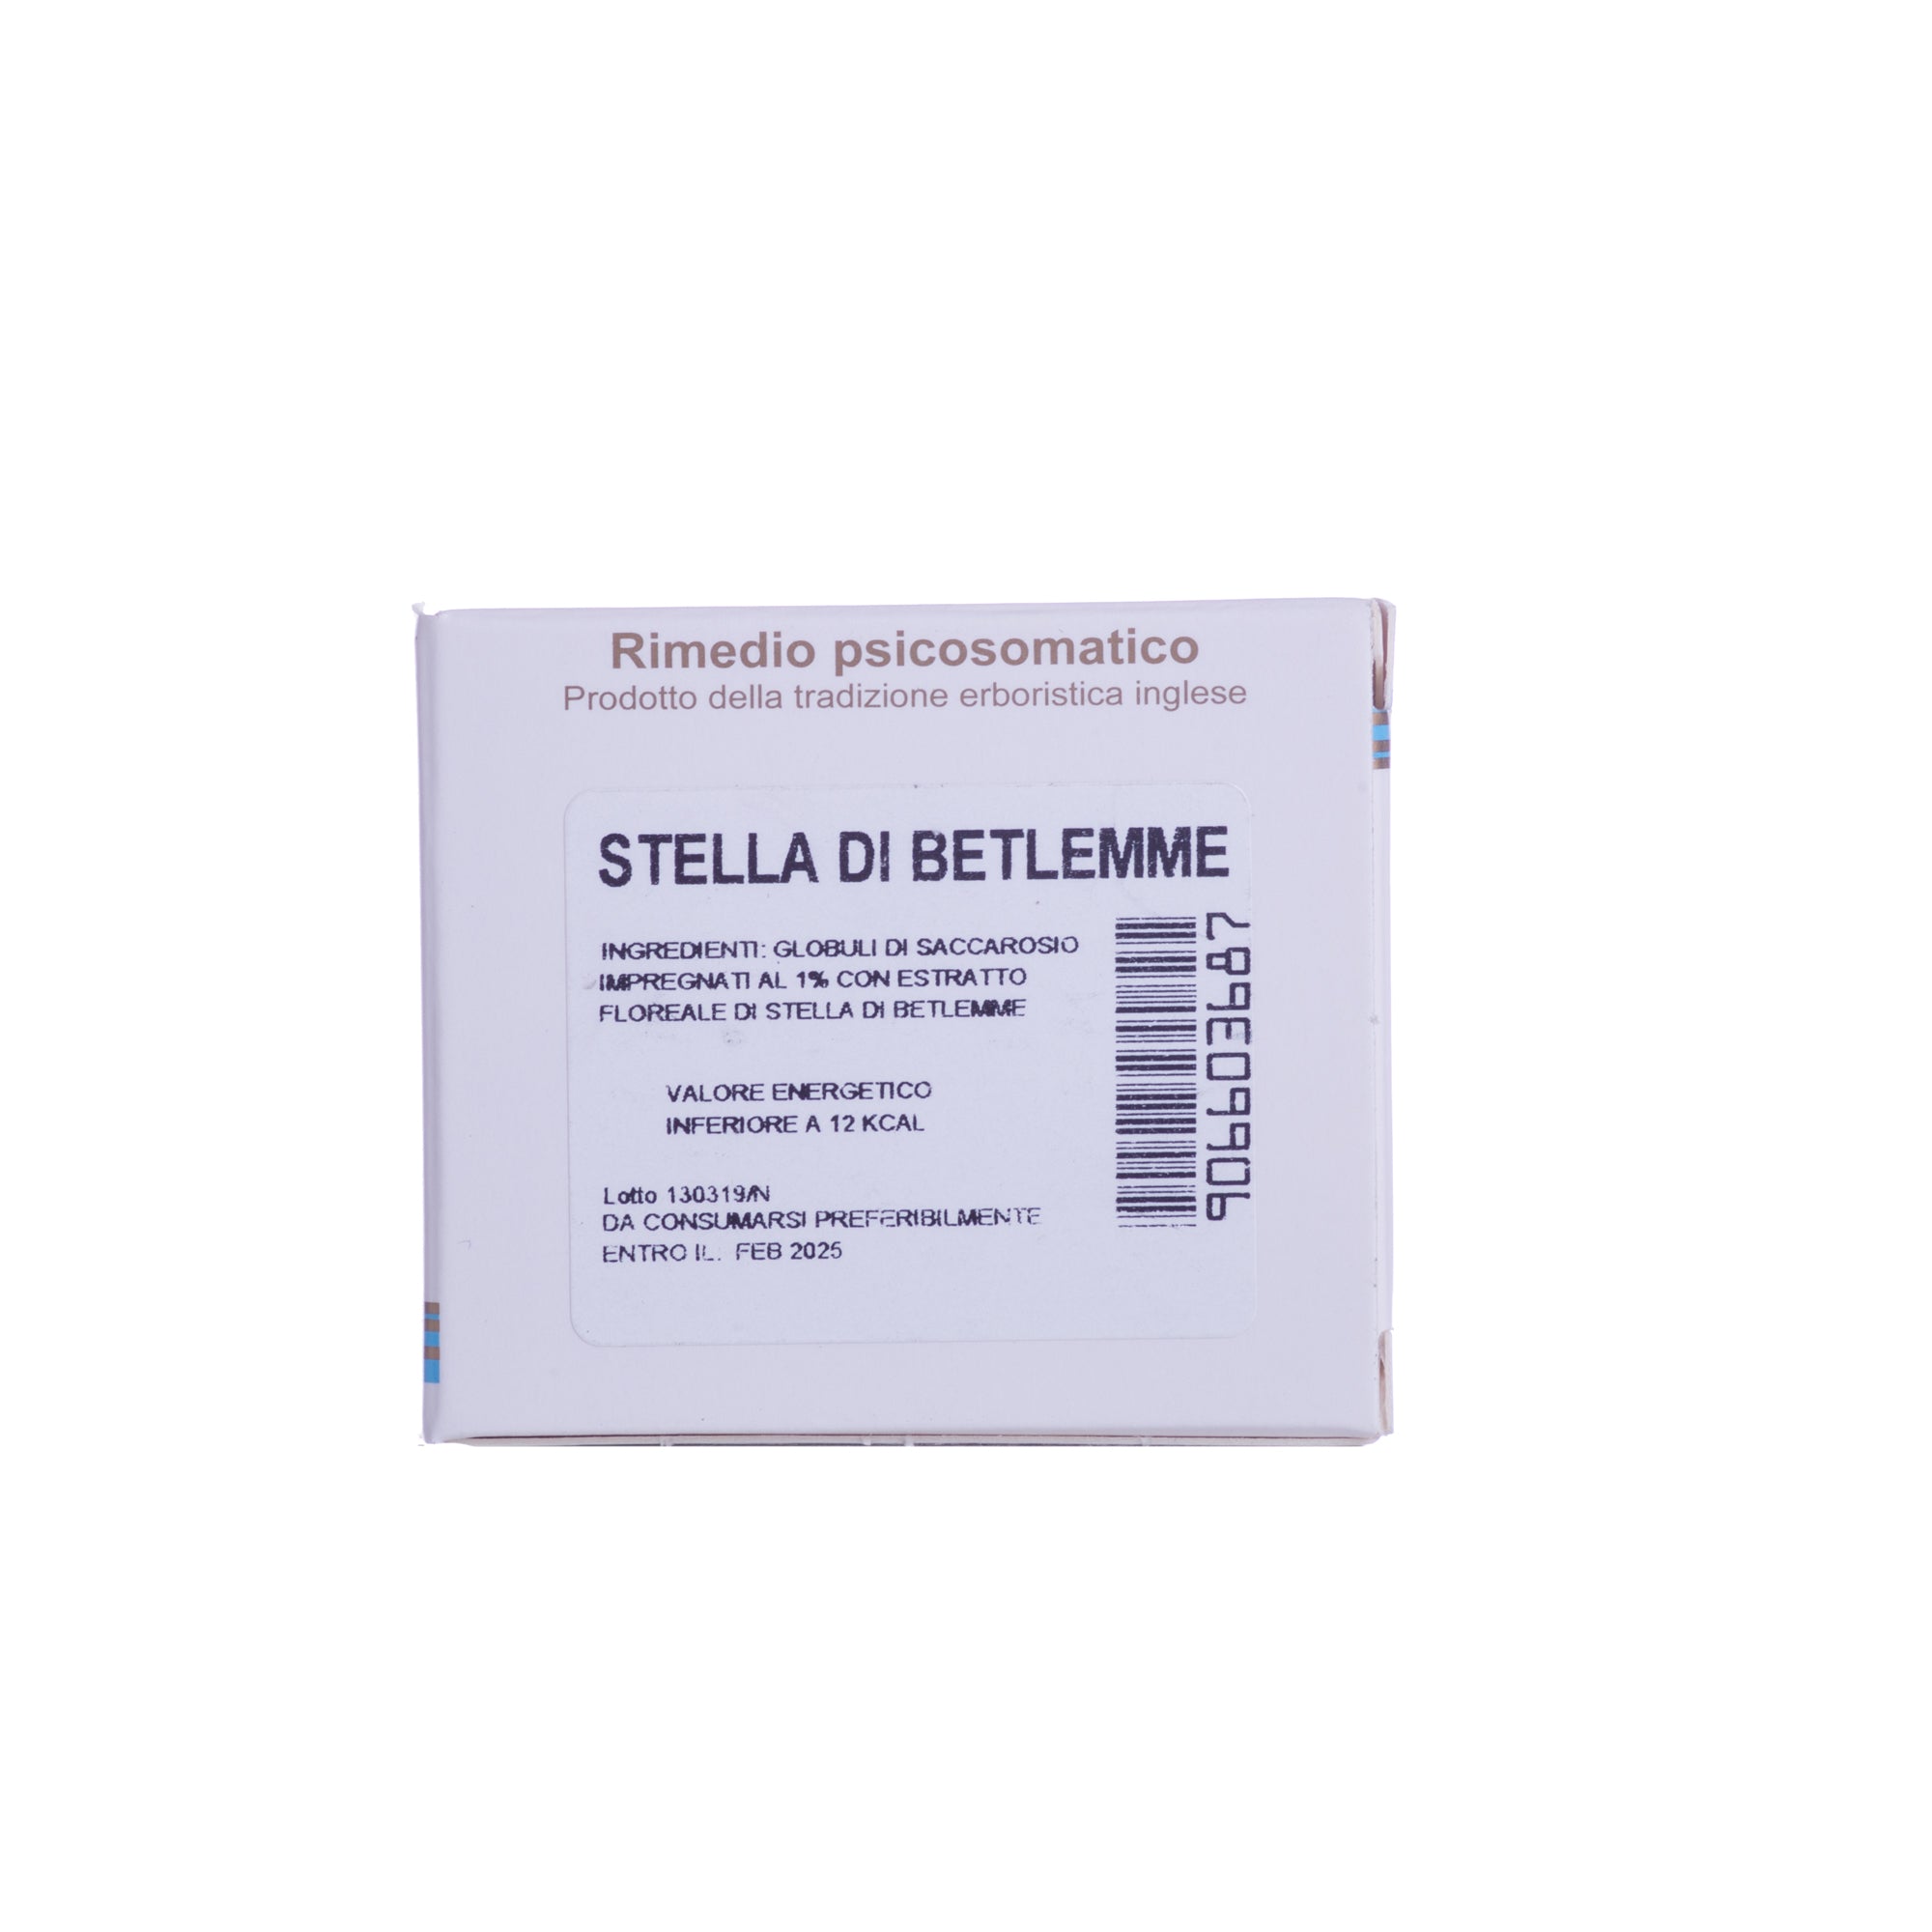 Stella Di Betlemme (Star Of Bethlehem) RP